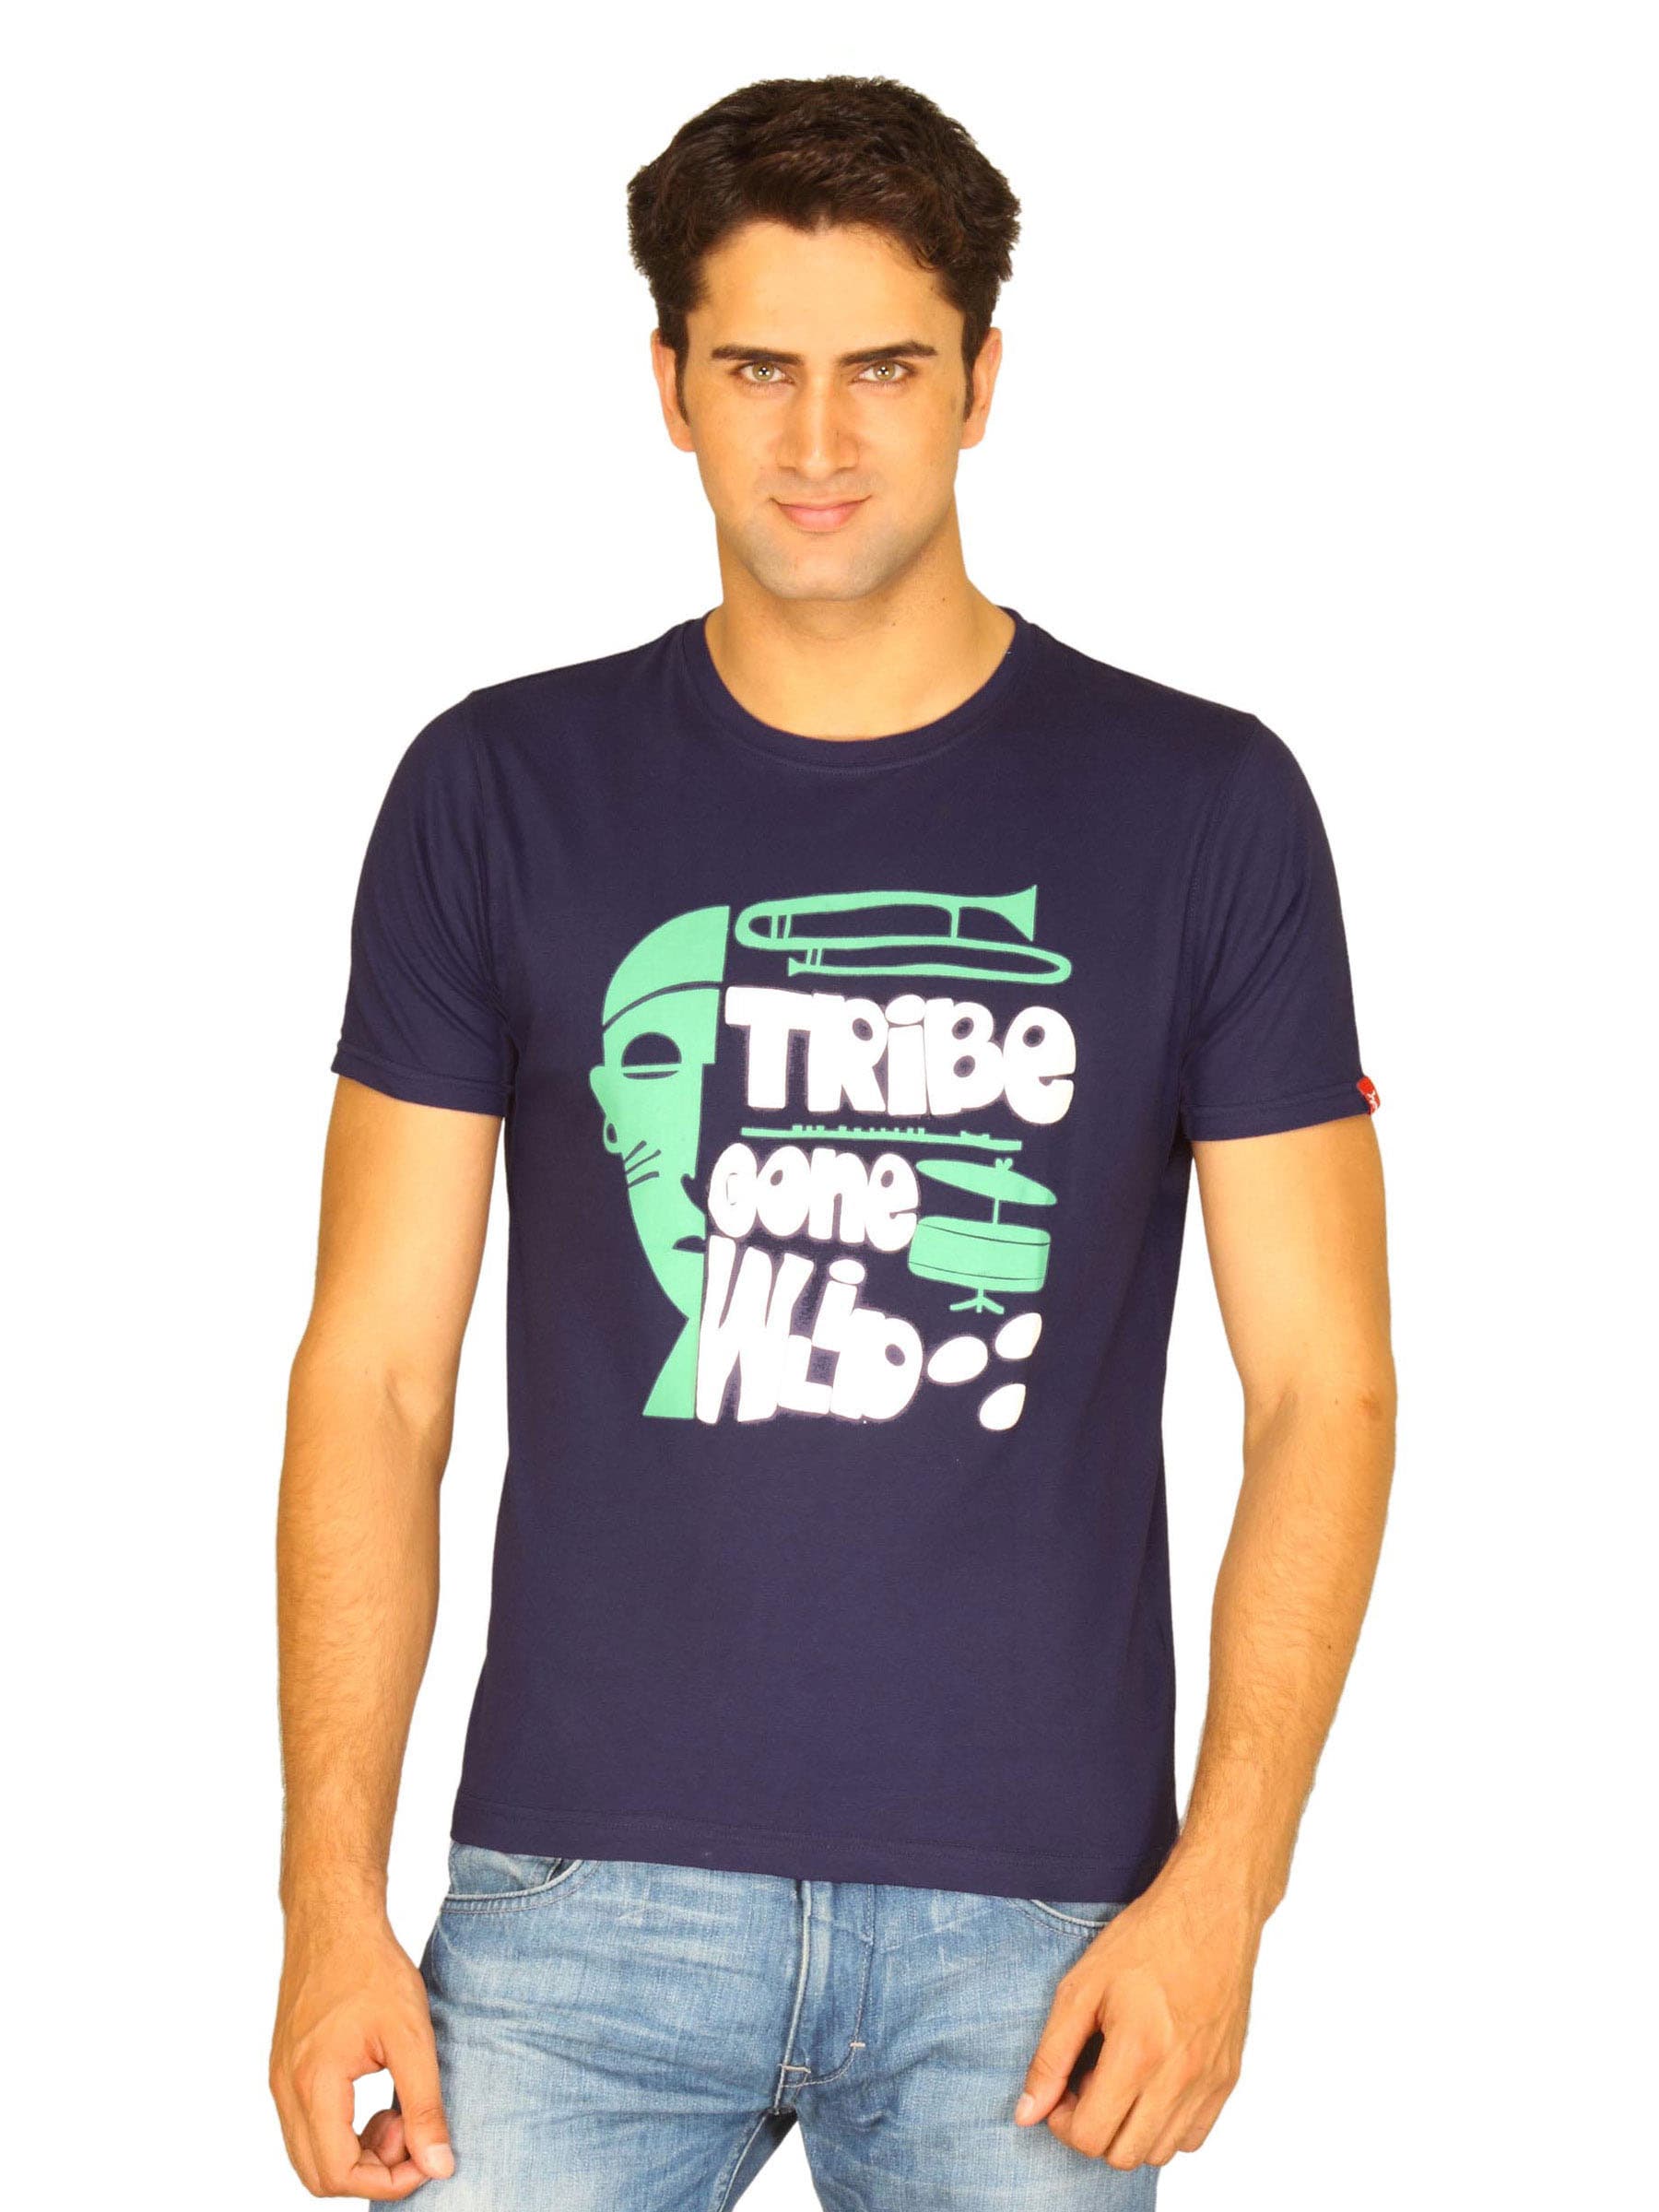 Probase Men's Tribe Gone Wild Purple T-shirt